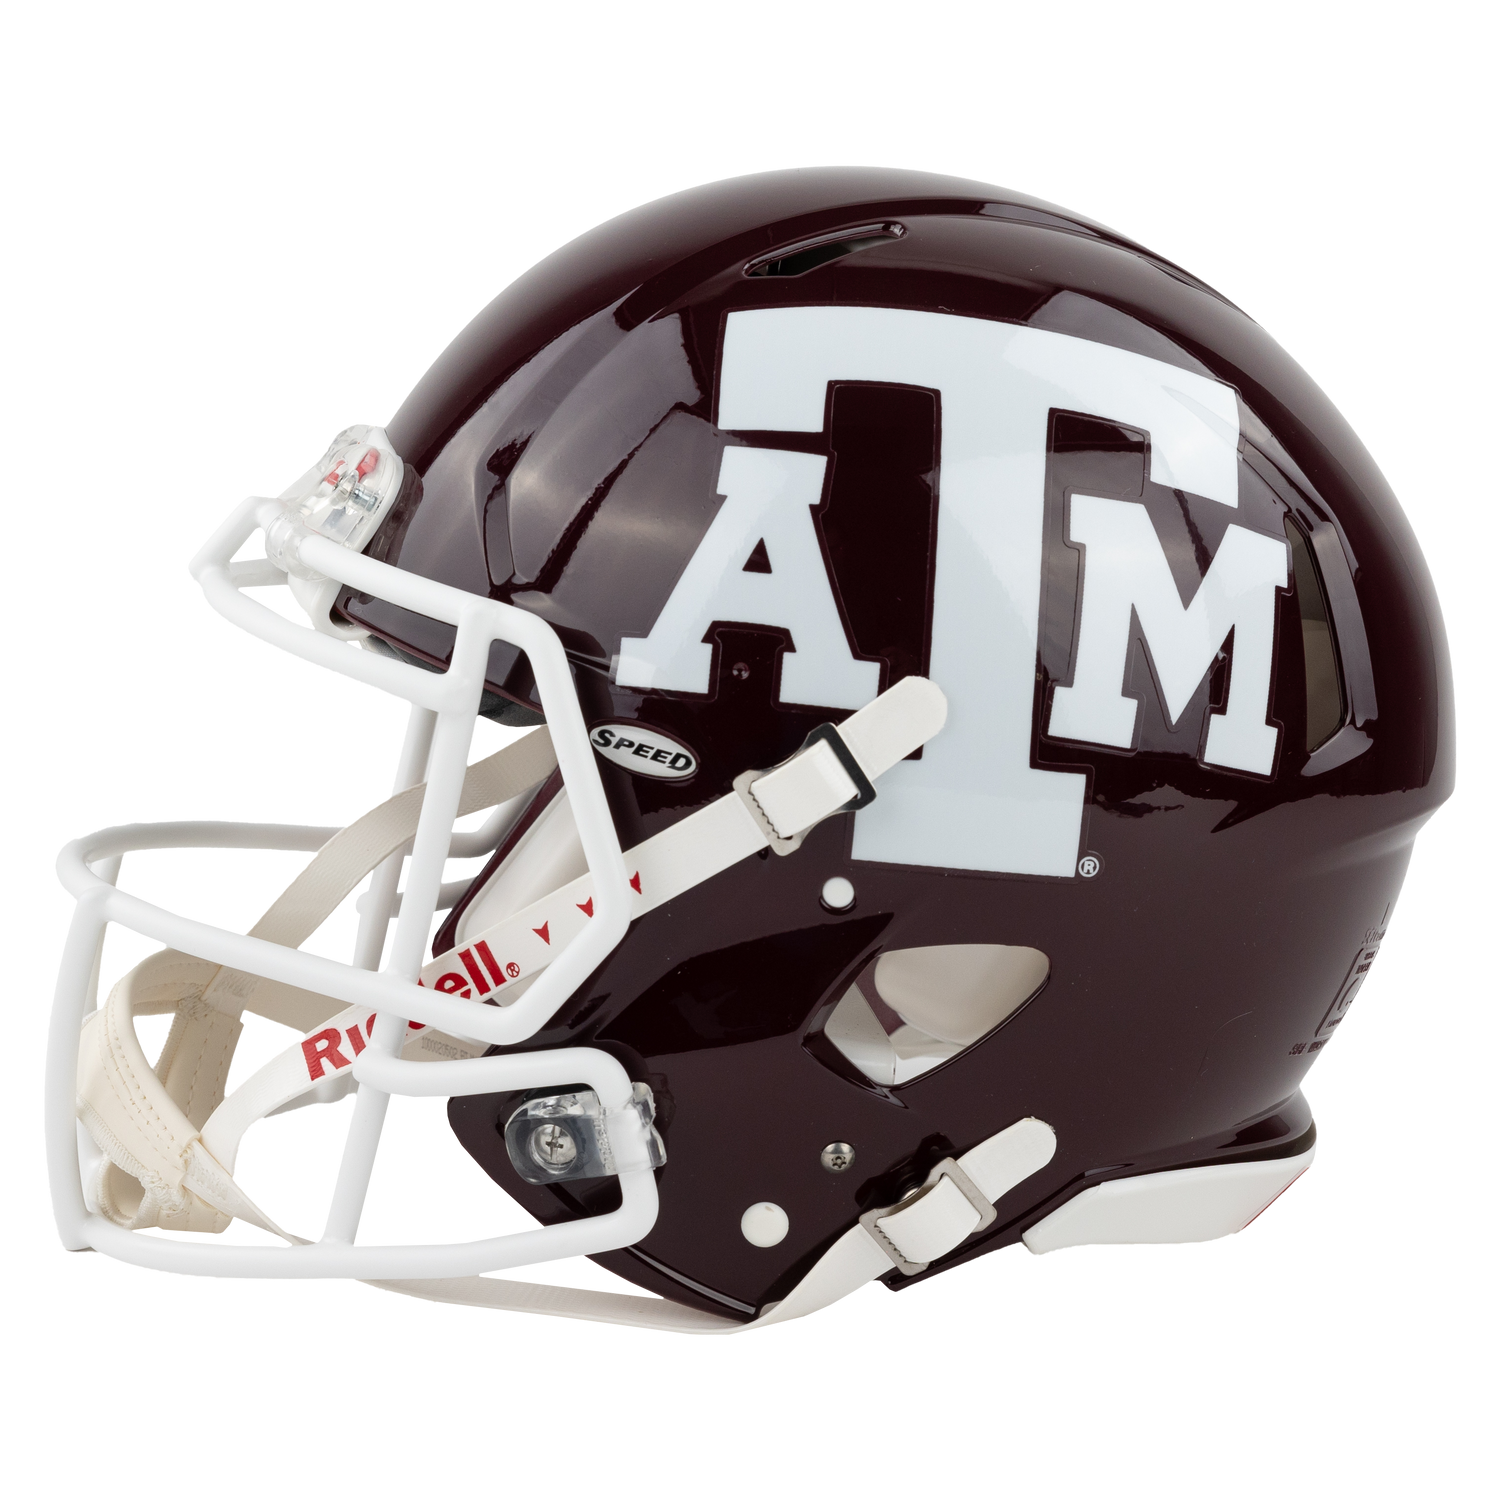 Riddell Texas A&M Speed Authentic Football Helmet